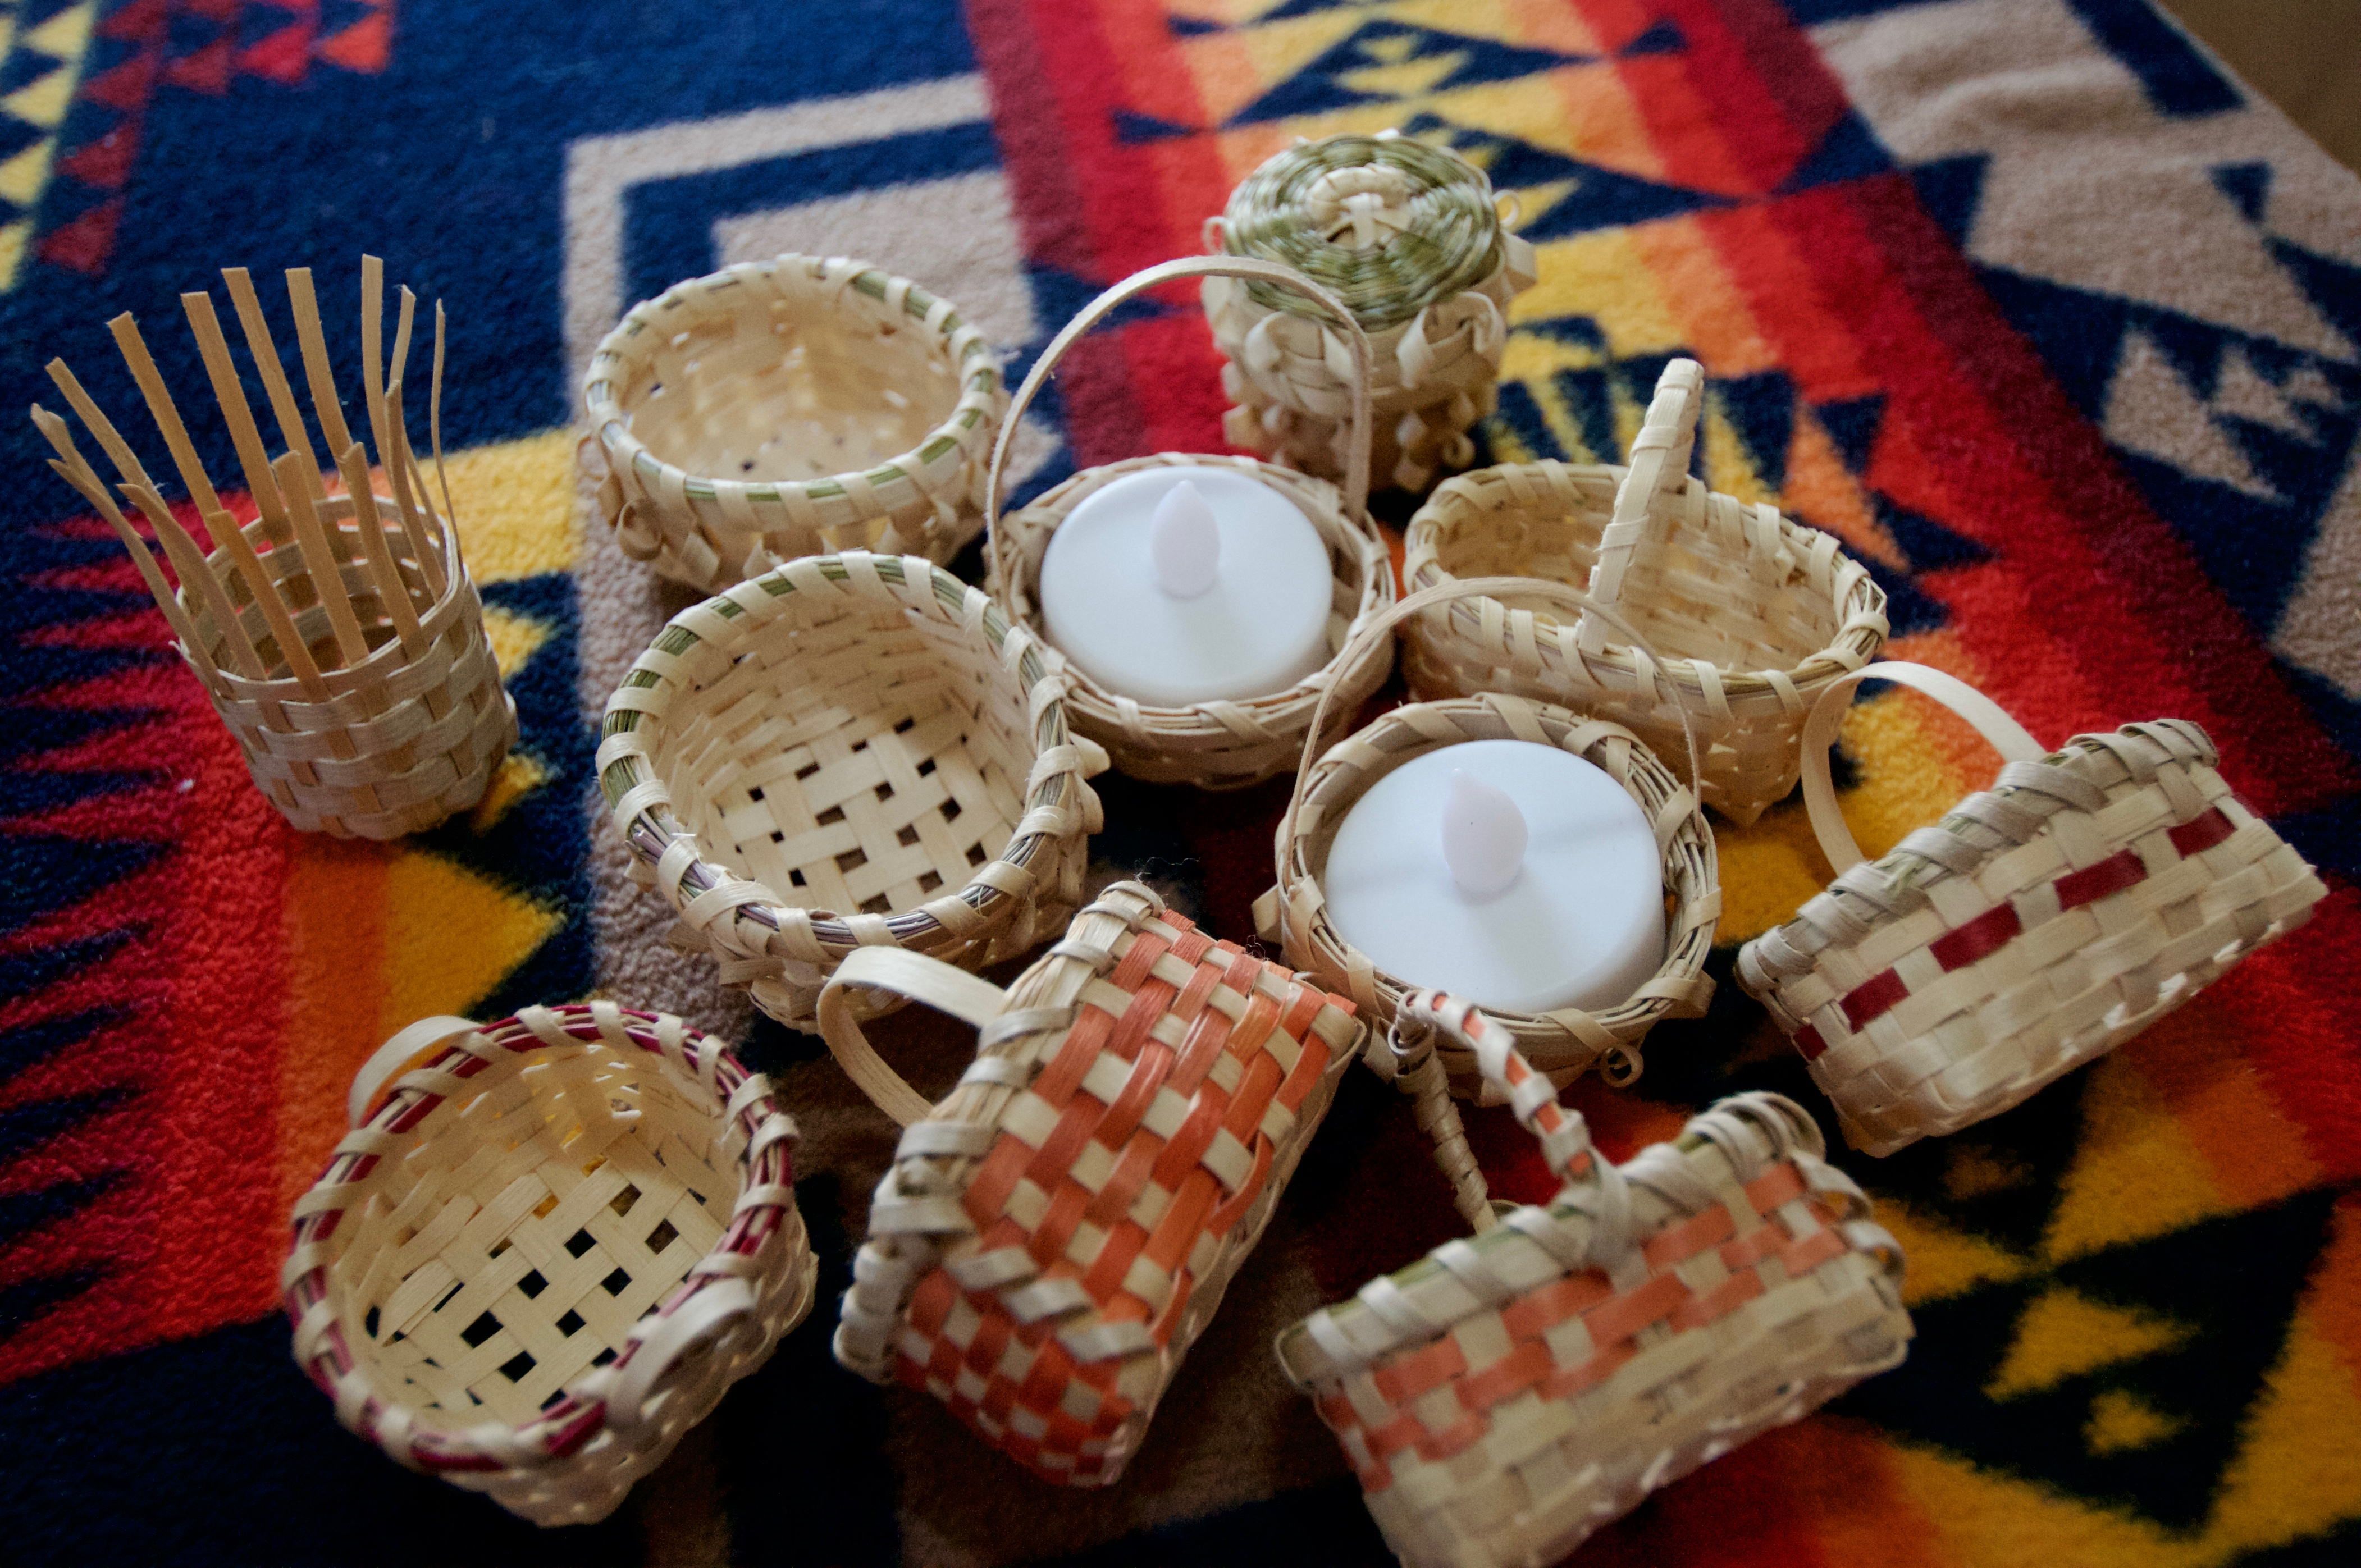 Indigenous Art Bank basket woven